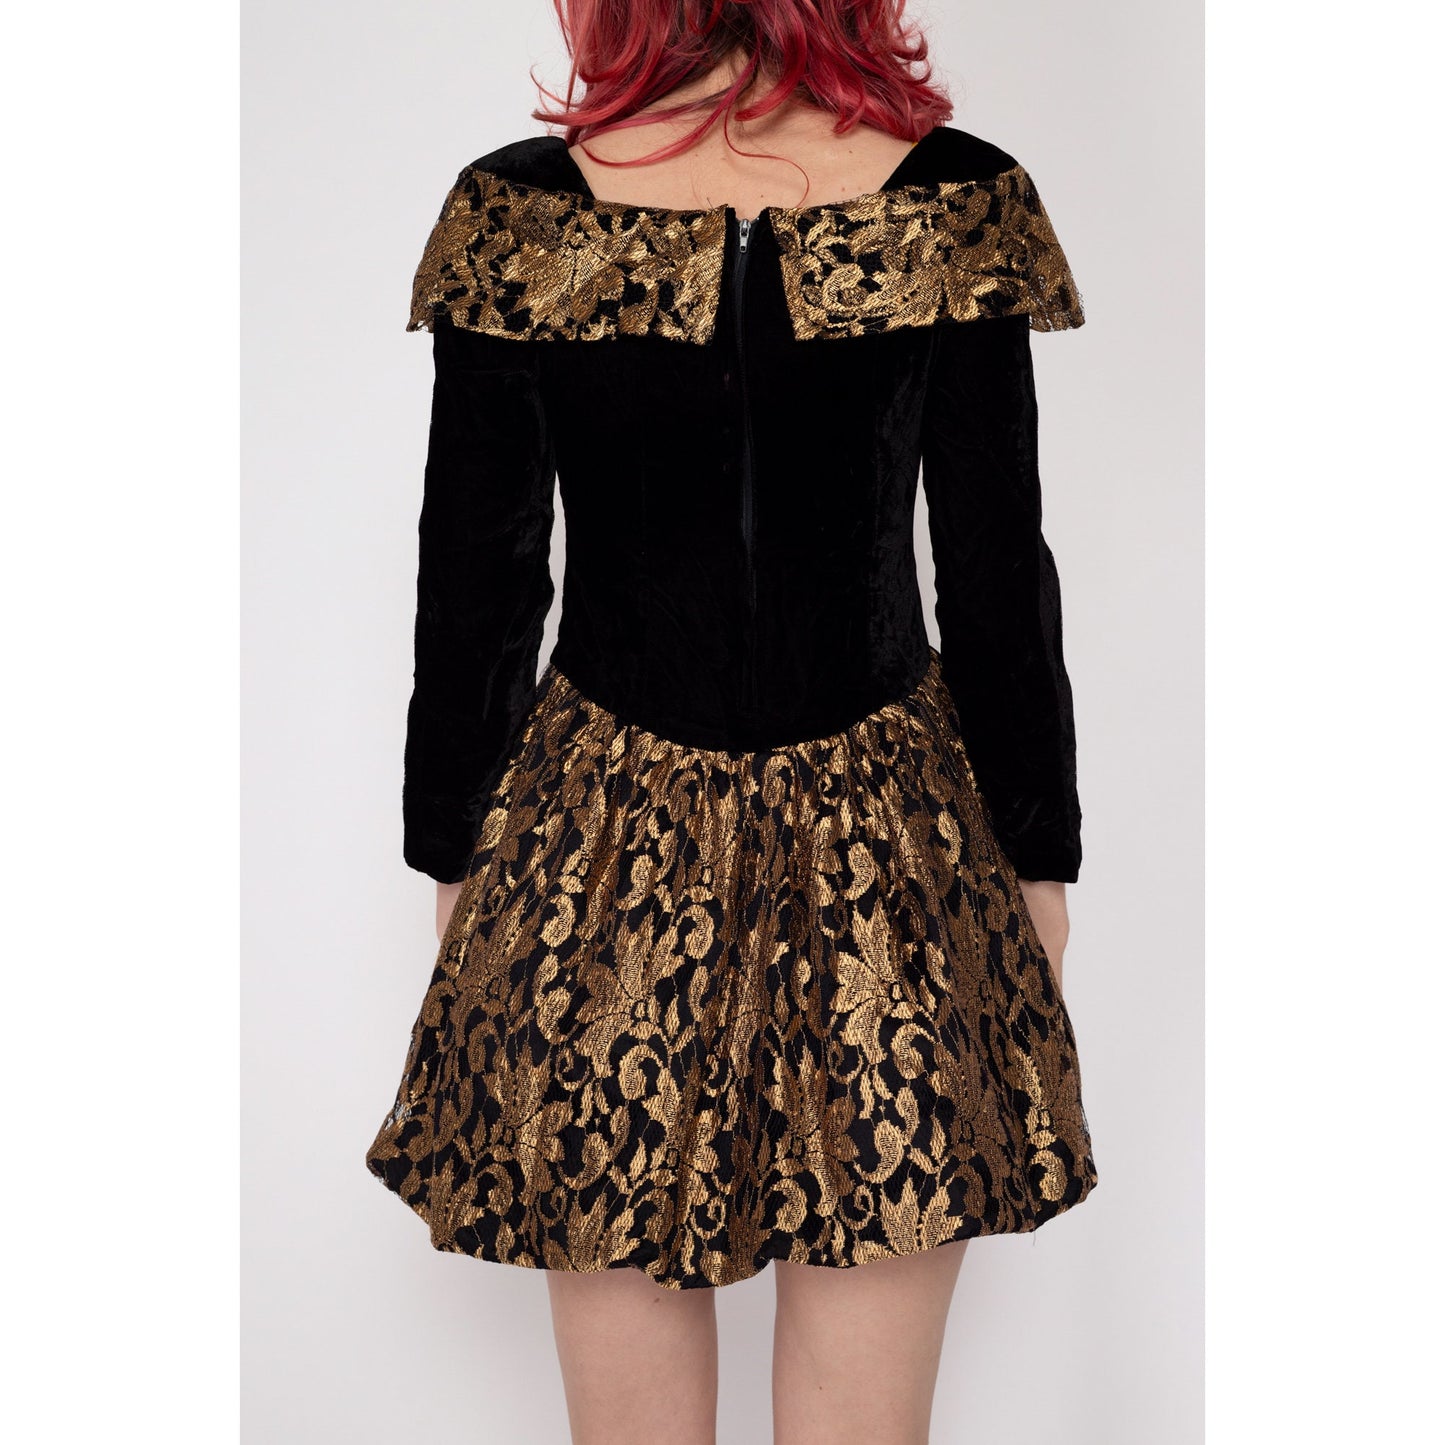 XXS 80s Velvet & Lace Bubble Skirt Party Dress | Vintage Black Gold Fit Flare Girl's Mini Dress